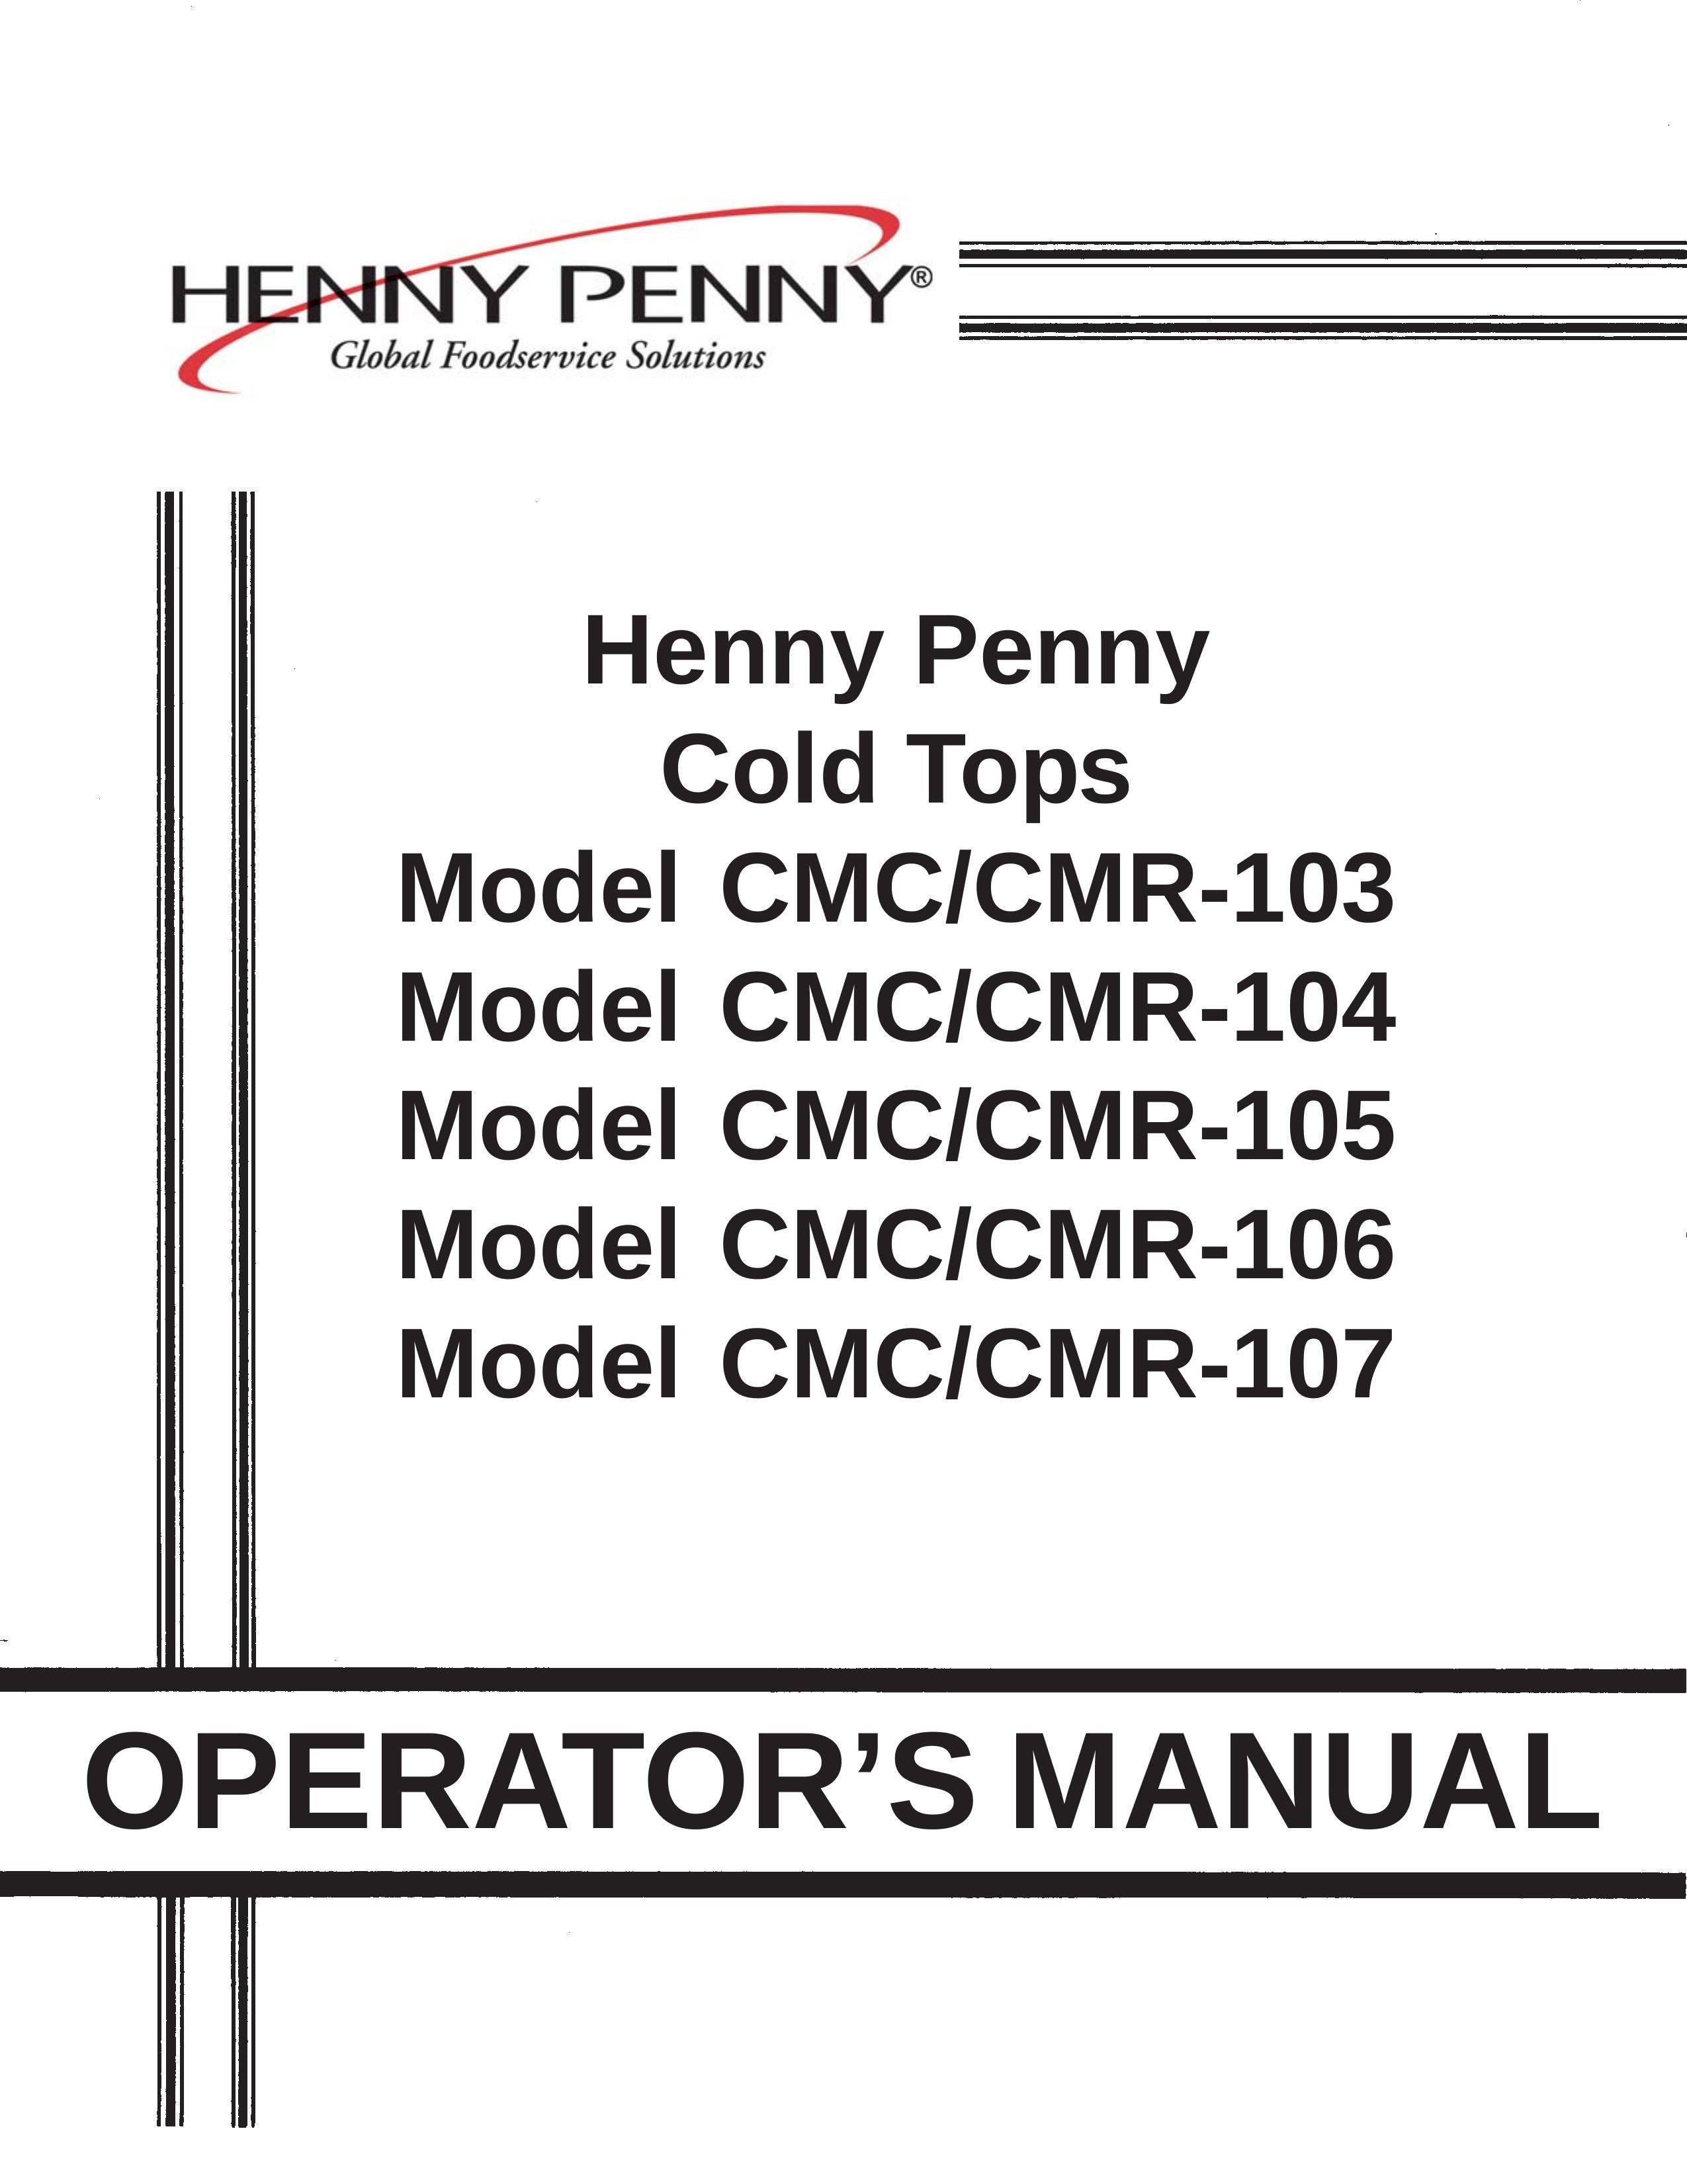 Henny Penny CMC/CMR-107 Refrigerator User Manual